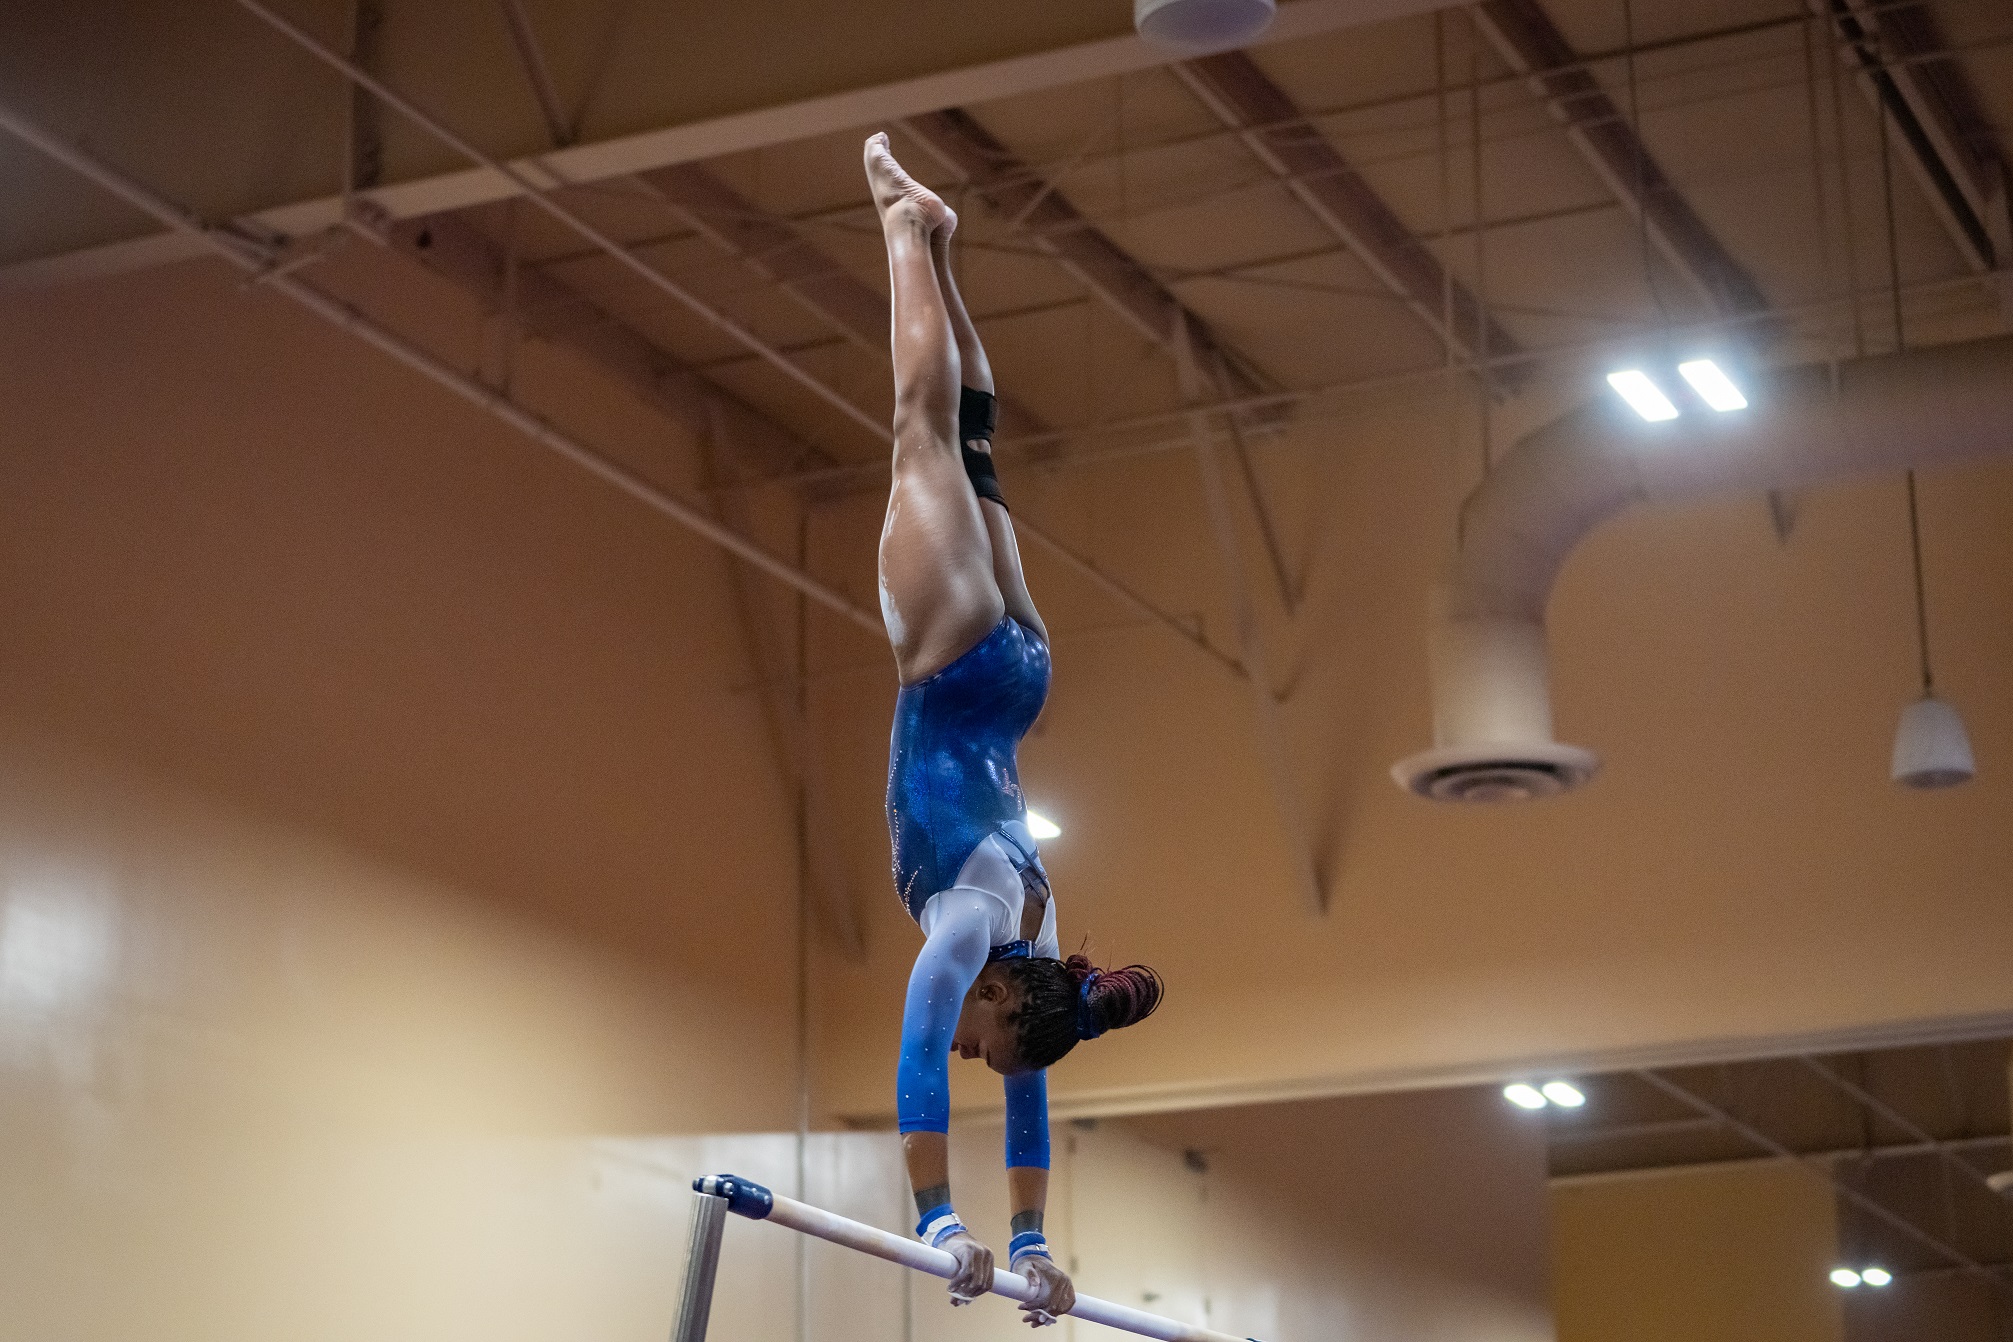 Rachel-Shines-gymnast-Stroud-Family-Colorado-lands-uneven-bars-giants